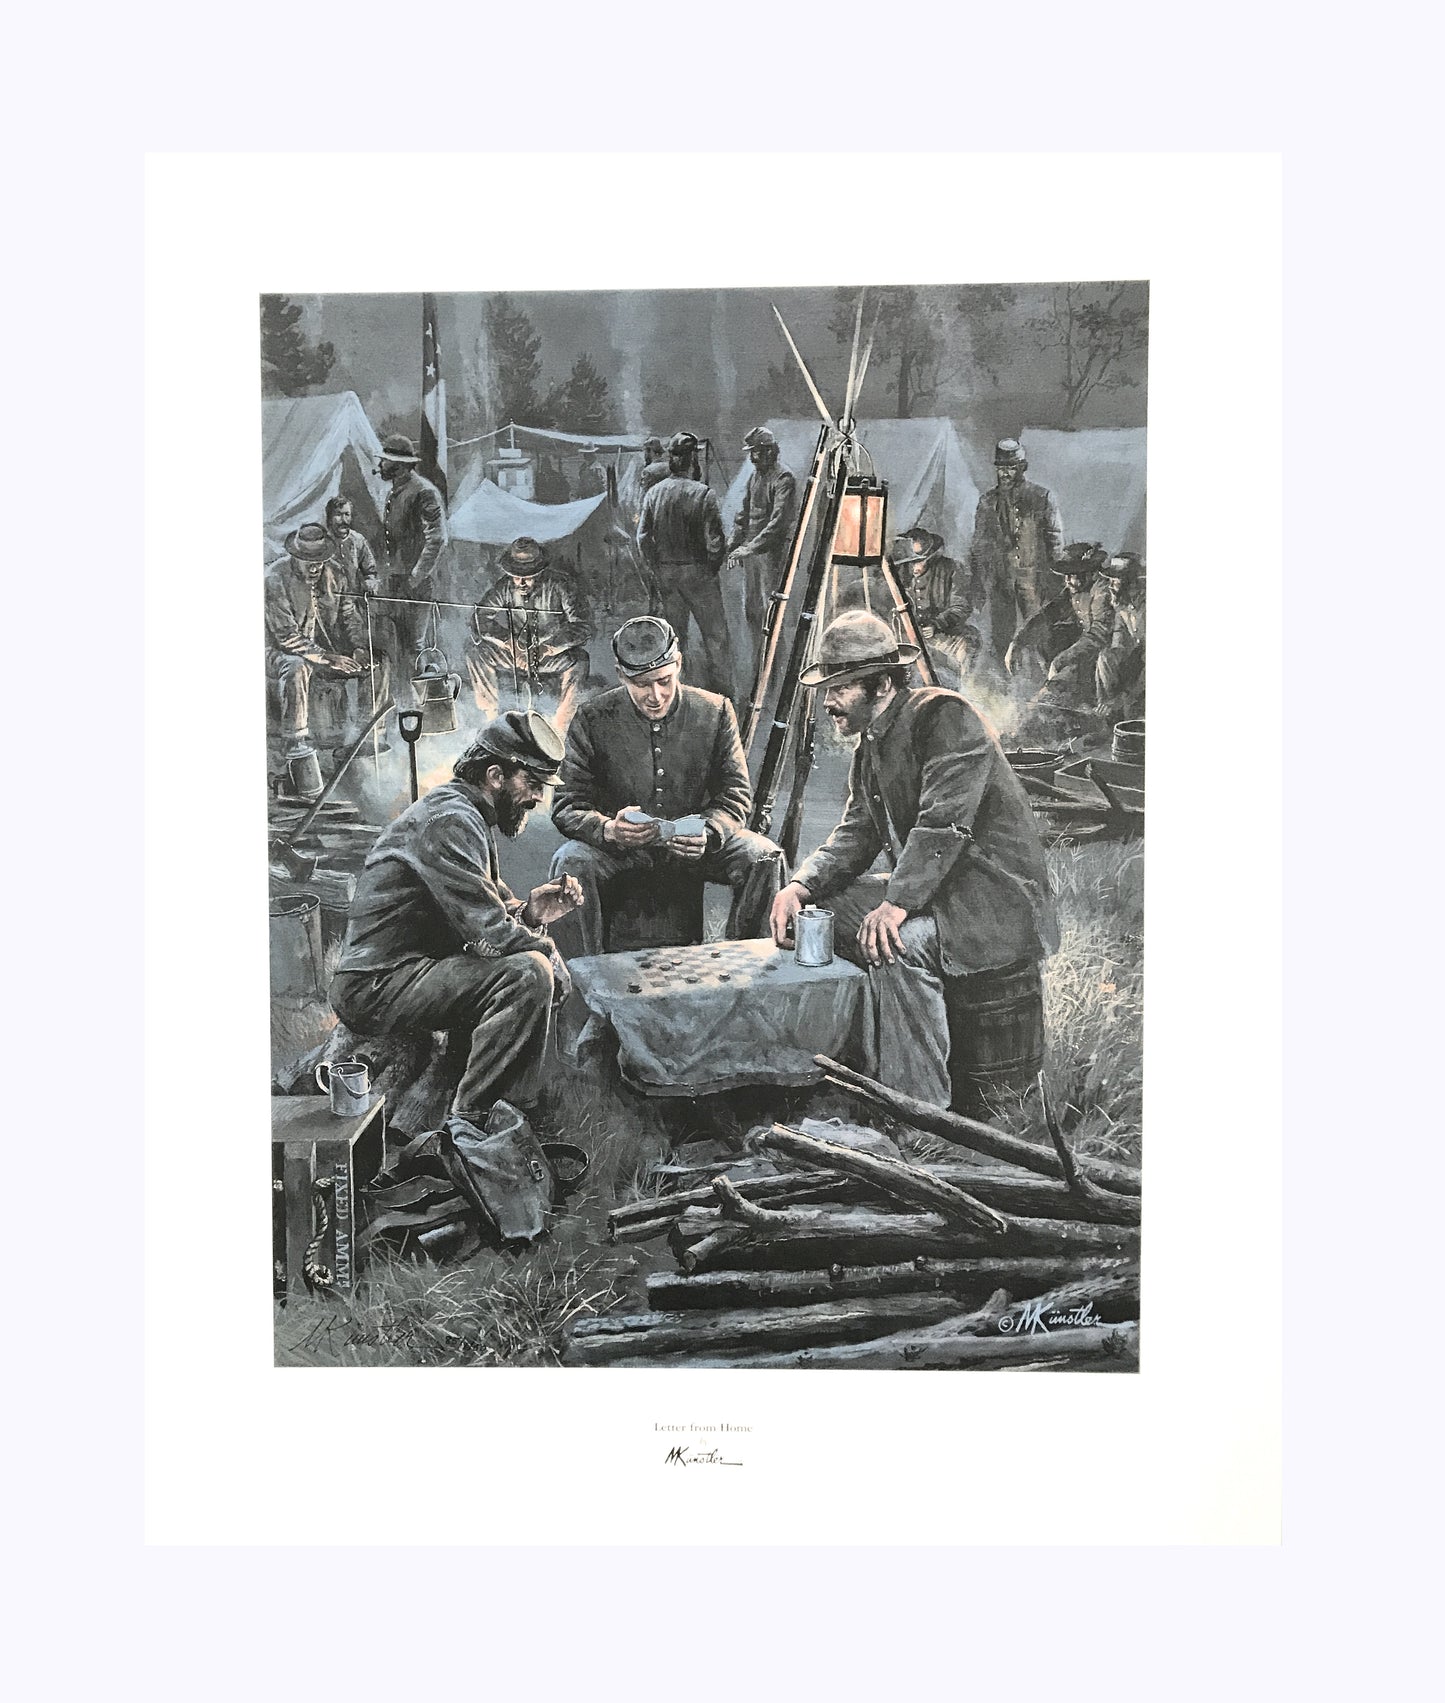 LETTER FROM HOME Limited Edition Civil War Print by Mort Kunstler